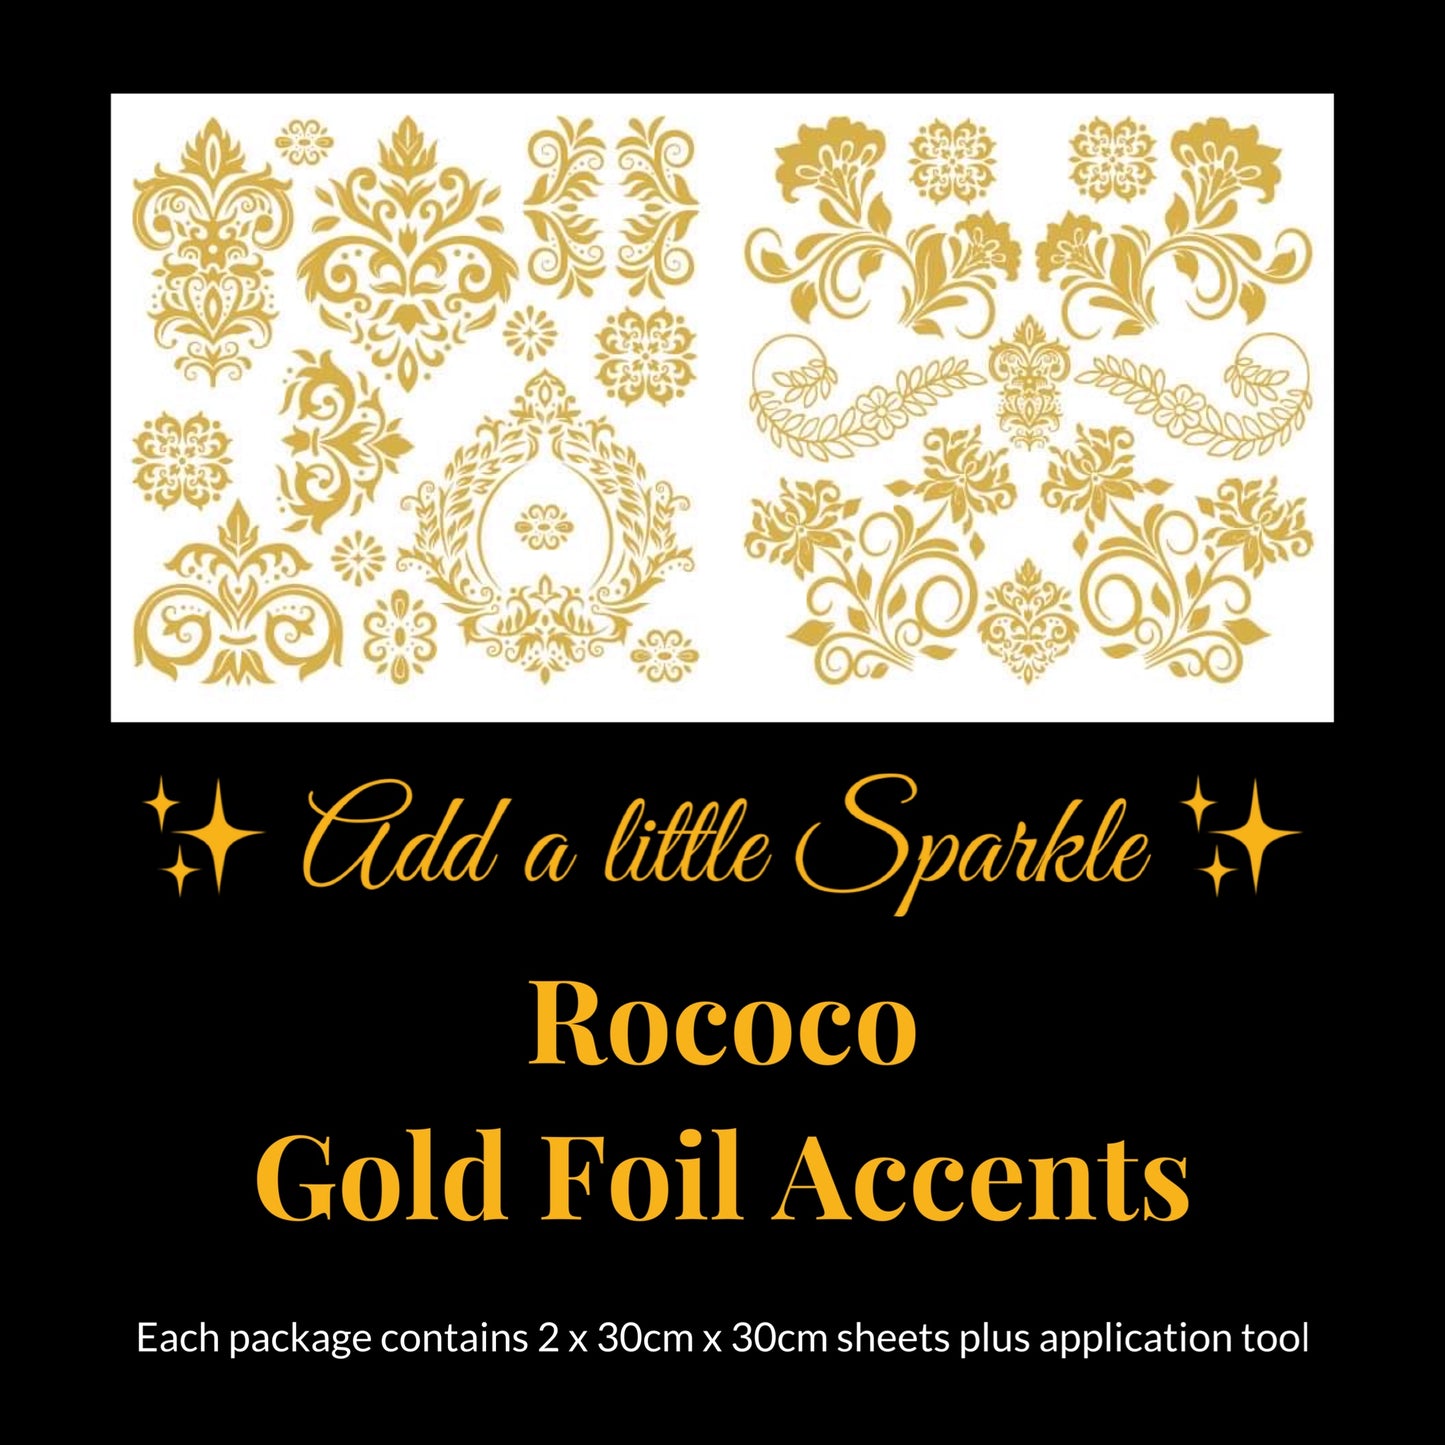 Rococo Gold Foil Accents